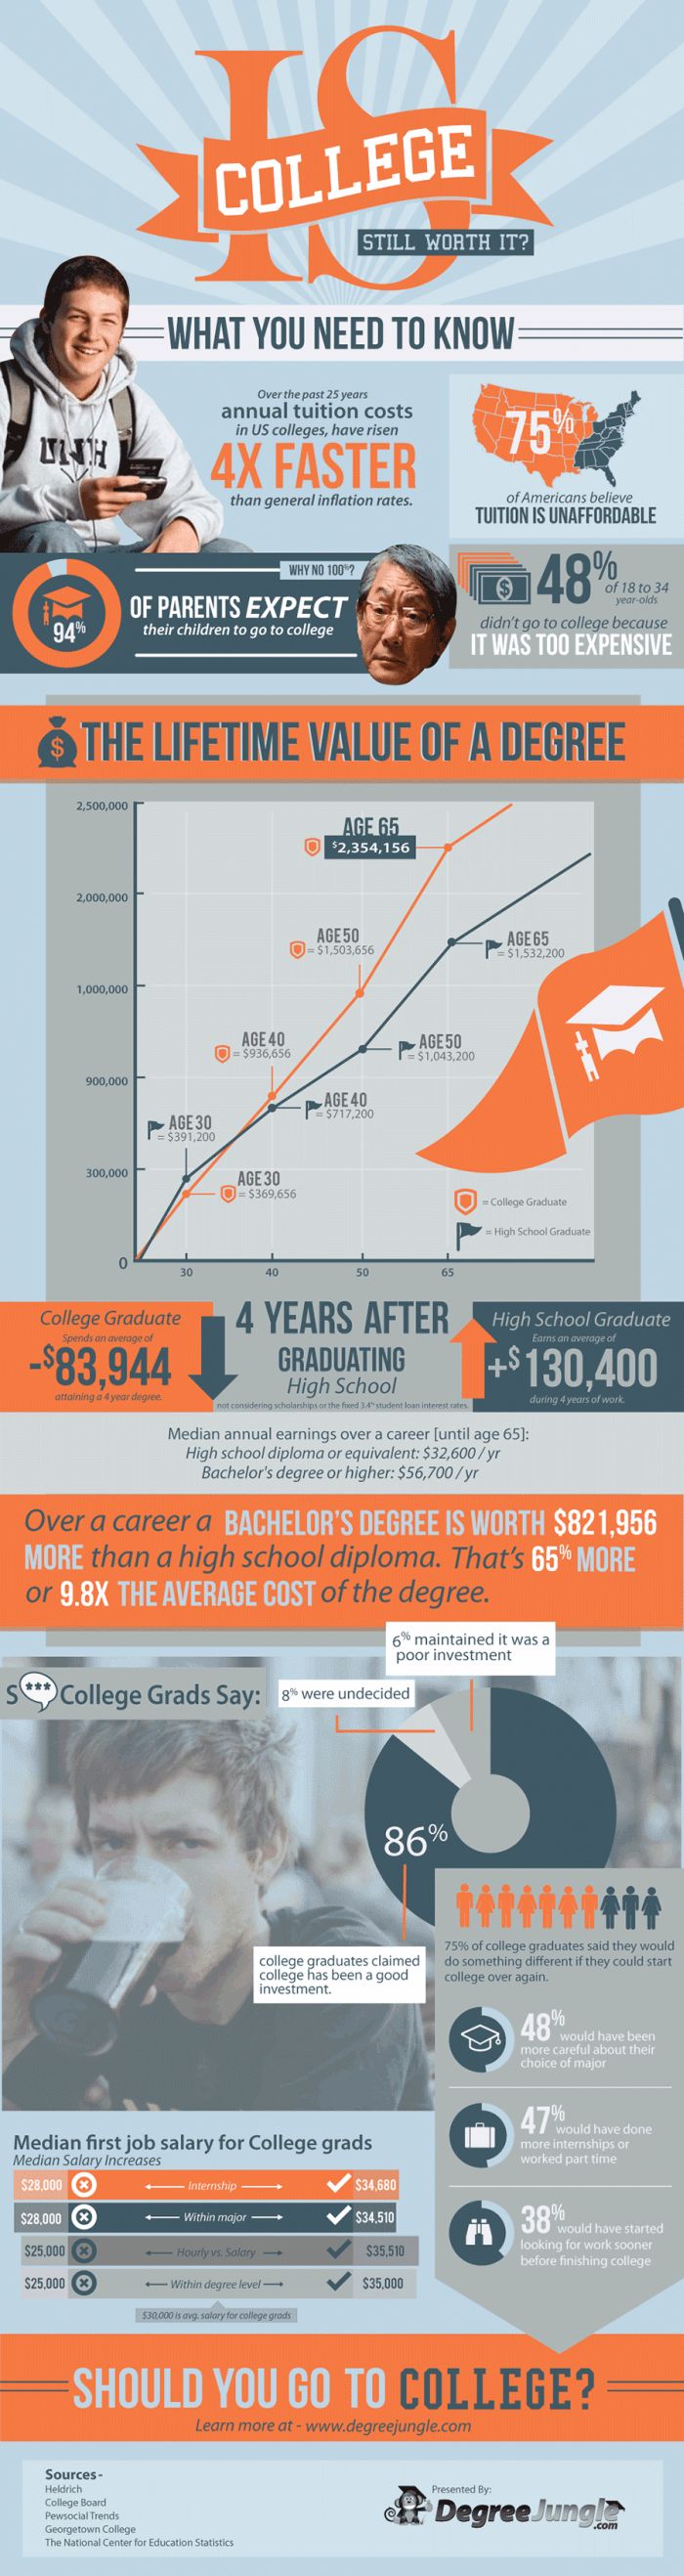 College Still Worth It? (infographic)